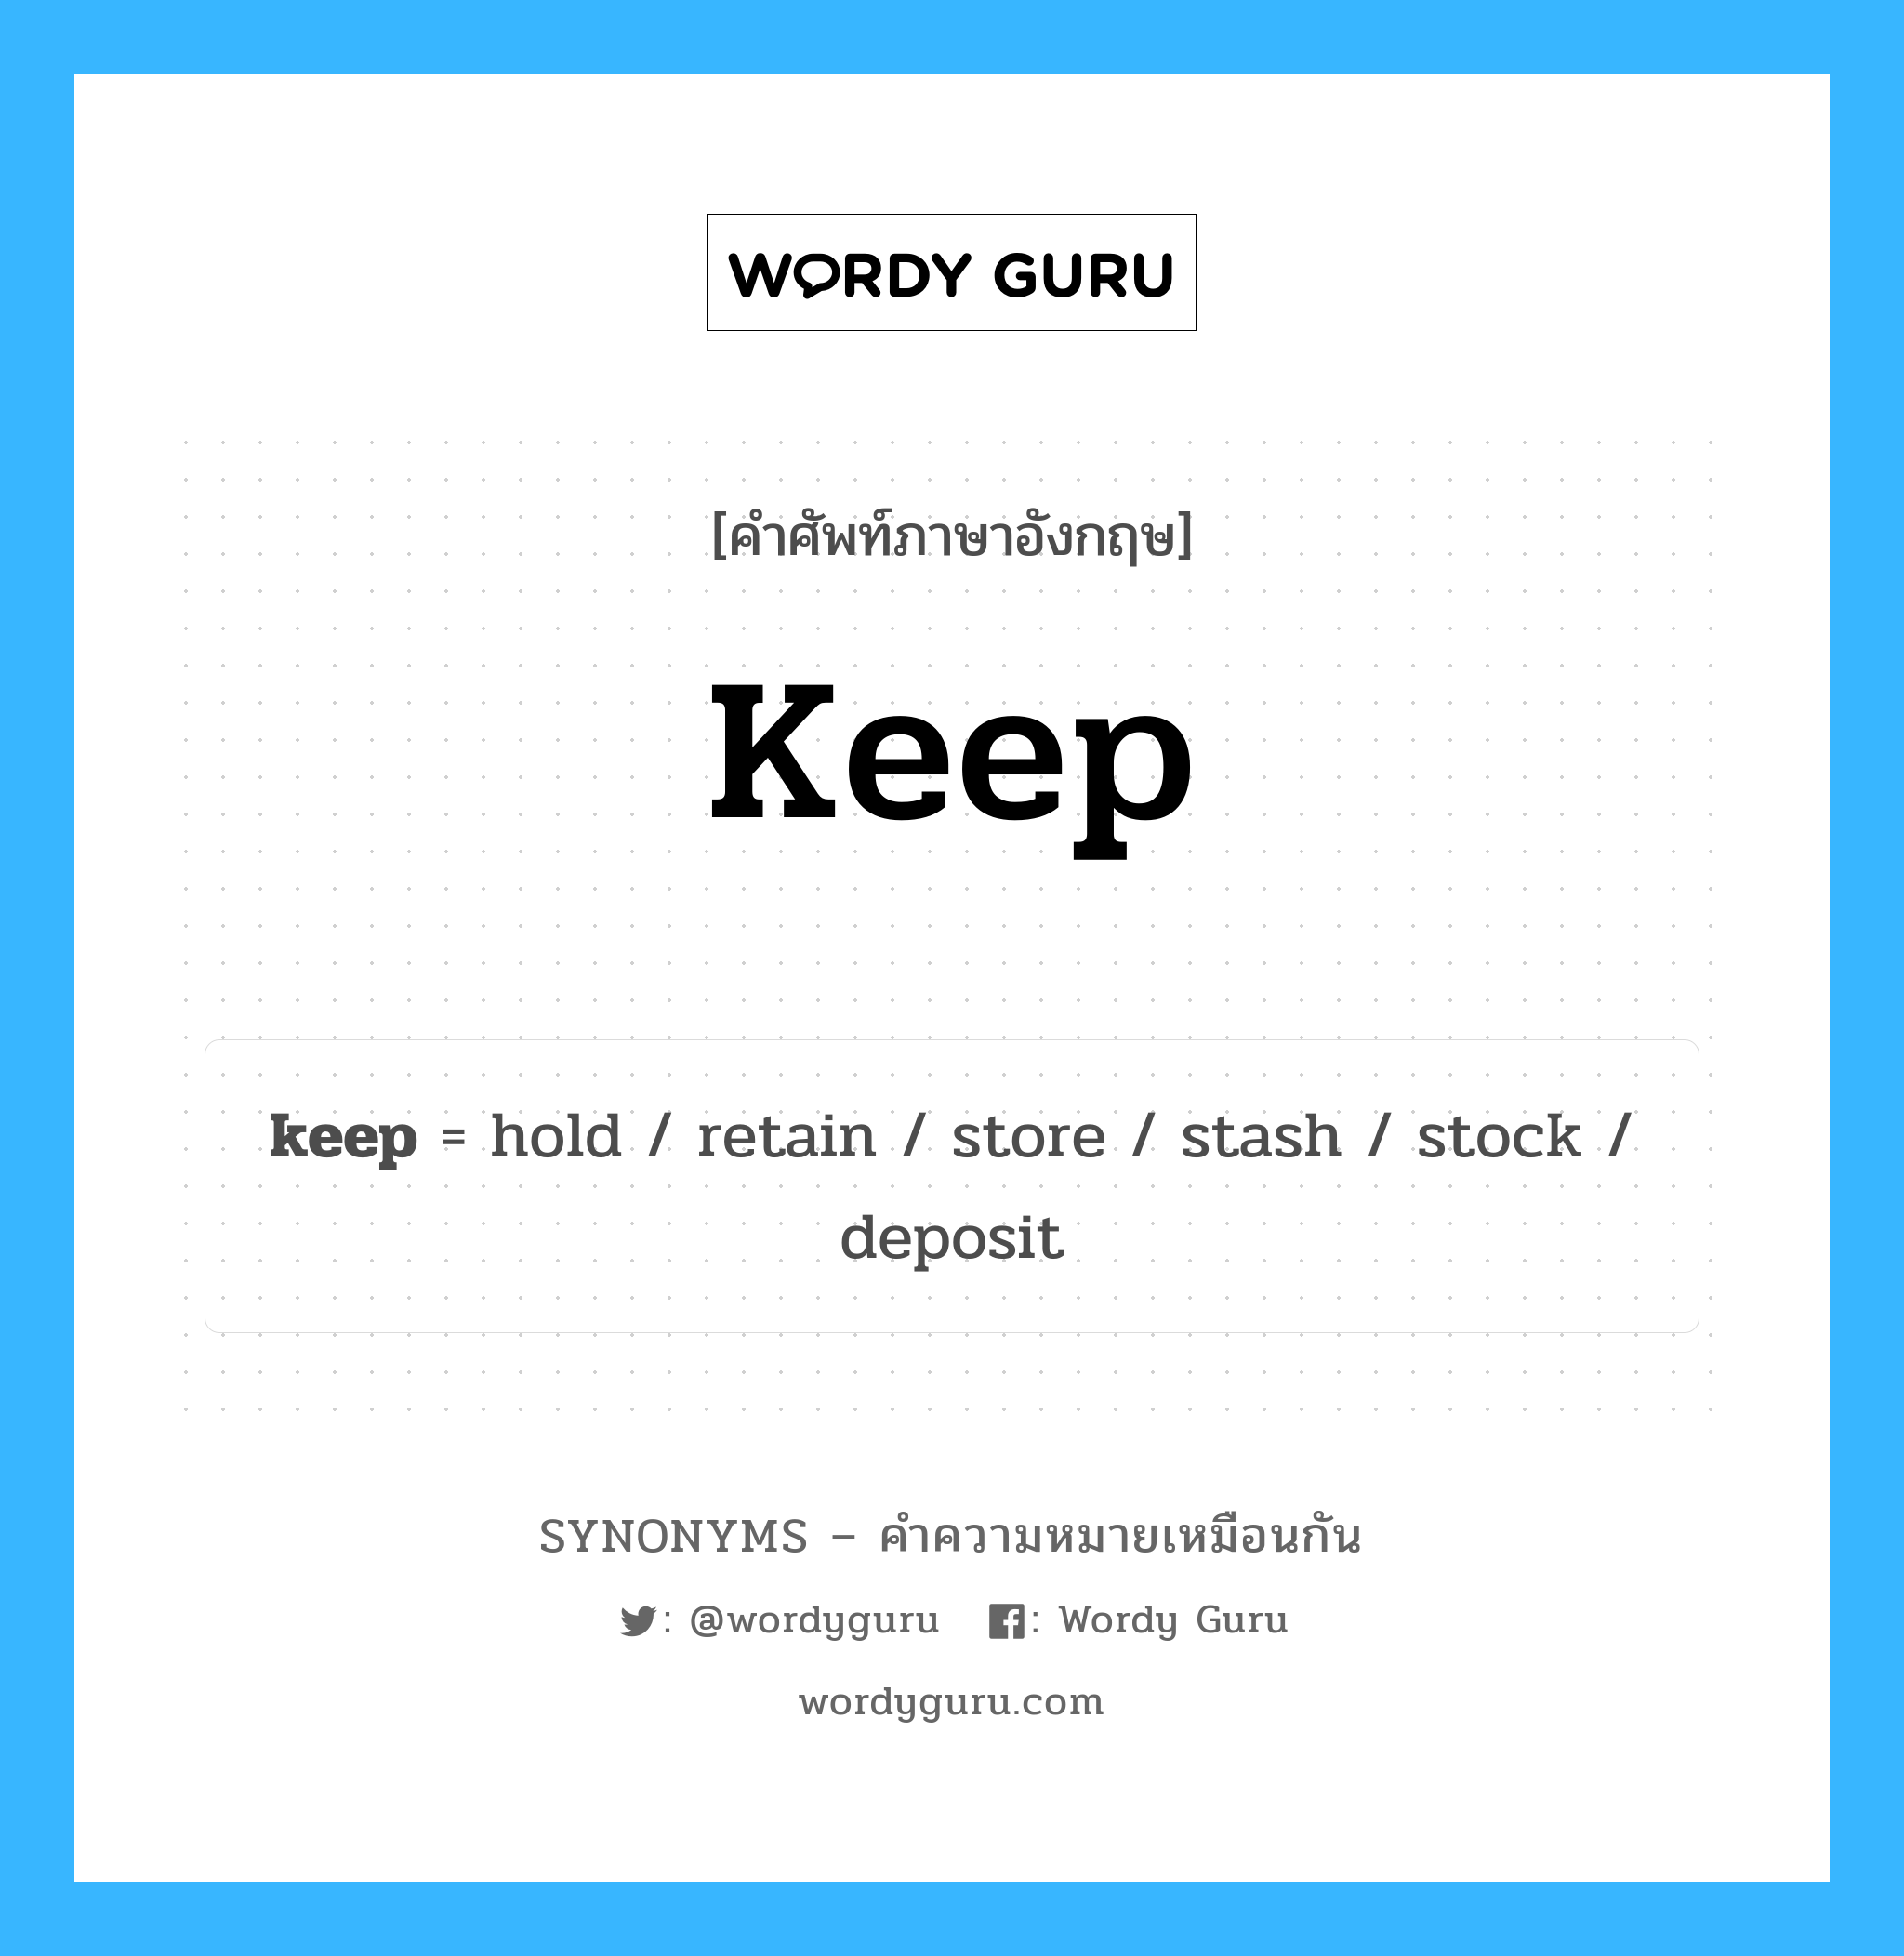 store เป็นหนึ่งใน keep และมีคำอื่น ๆ อีกดังนี้, คำศัพท์ภาษาอังกฤษ store ความหมายคล้ายกันกับ keep แปลว่า ร้านค้า หมวด keep